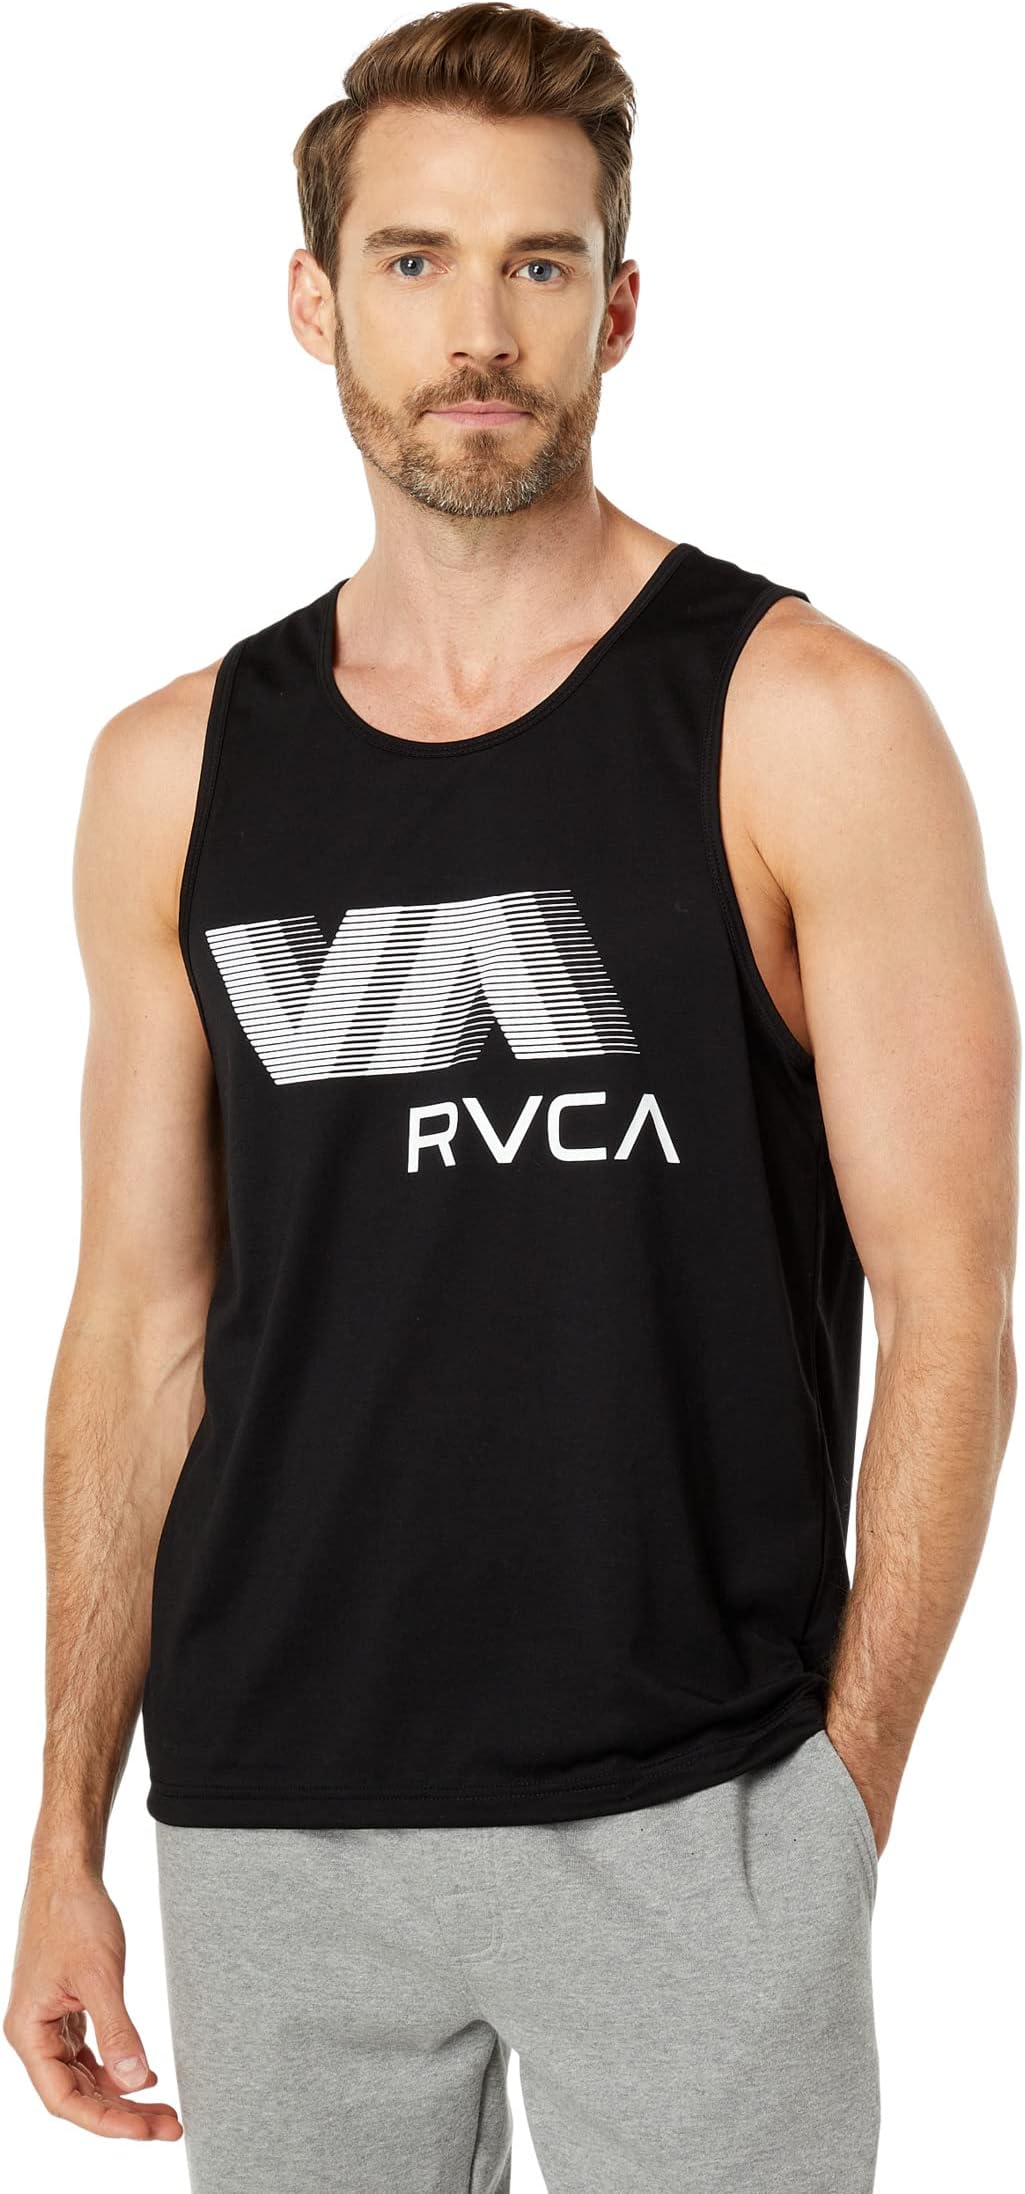 Топ VA RVCA Blur Tank RVCA, черный blur think tank vinyl